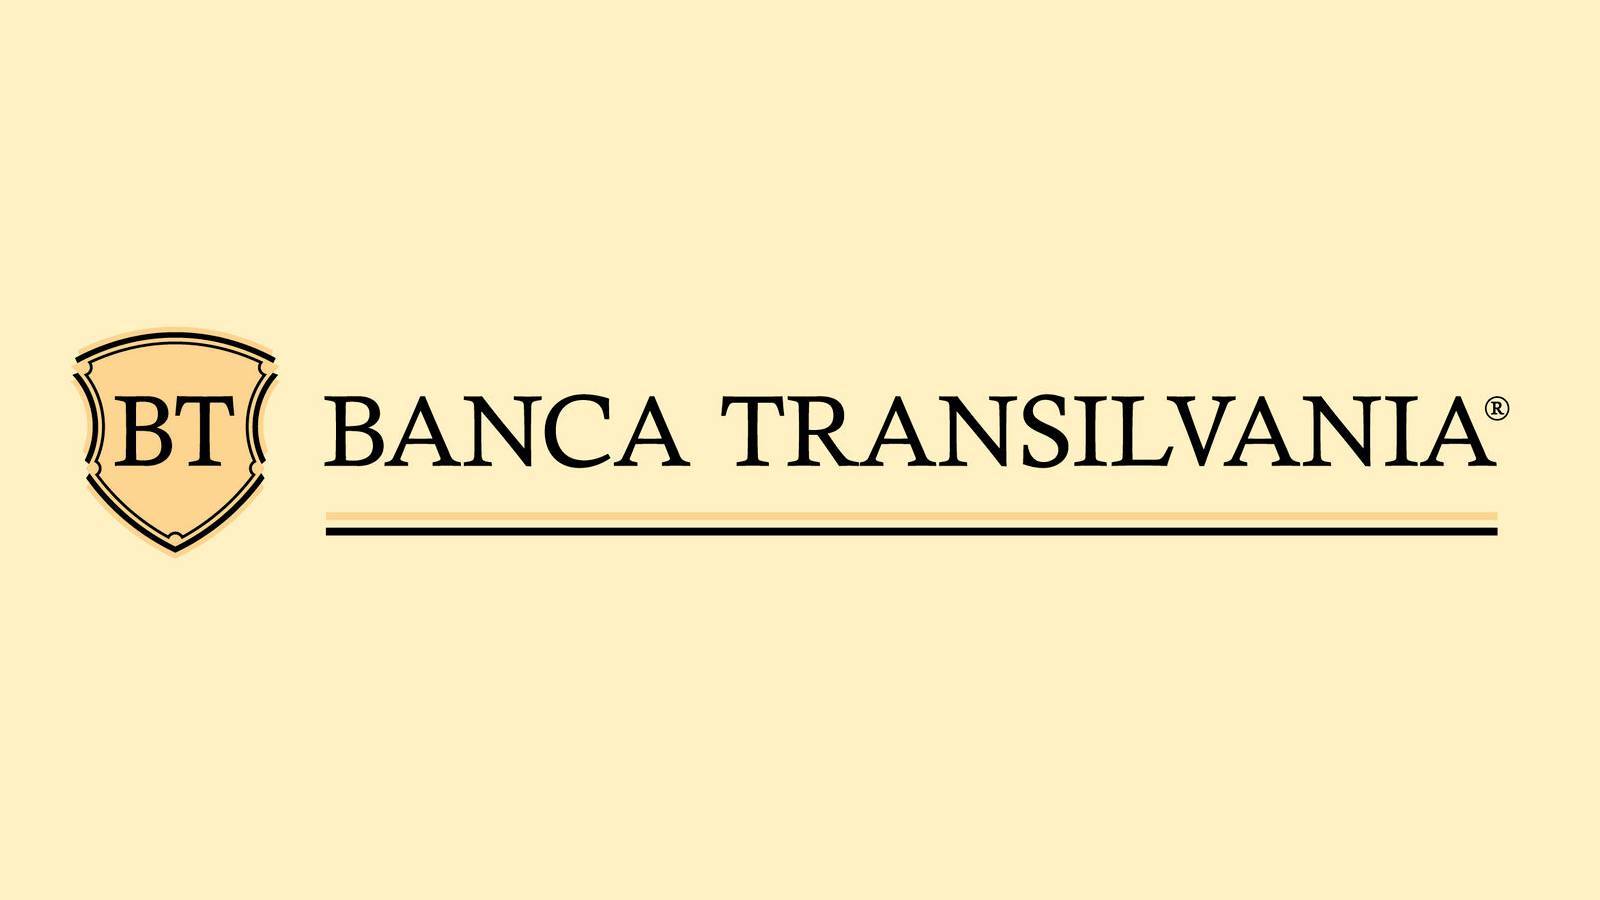 BANCA Transilvania Informazioni di AVVISO ufficiale inviate a tutti i clienti